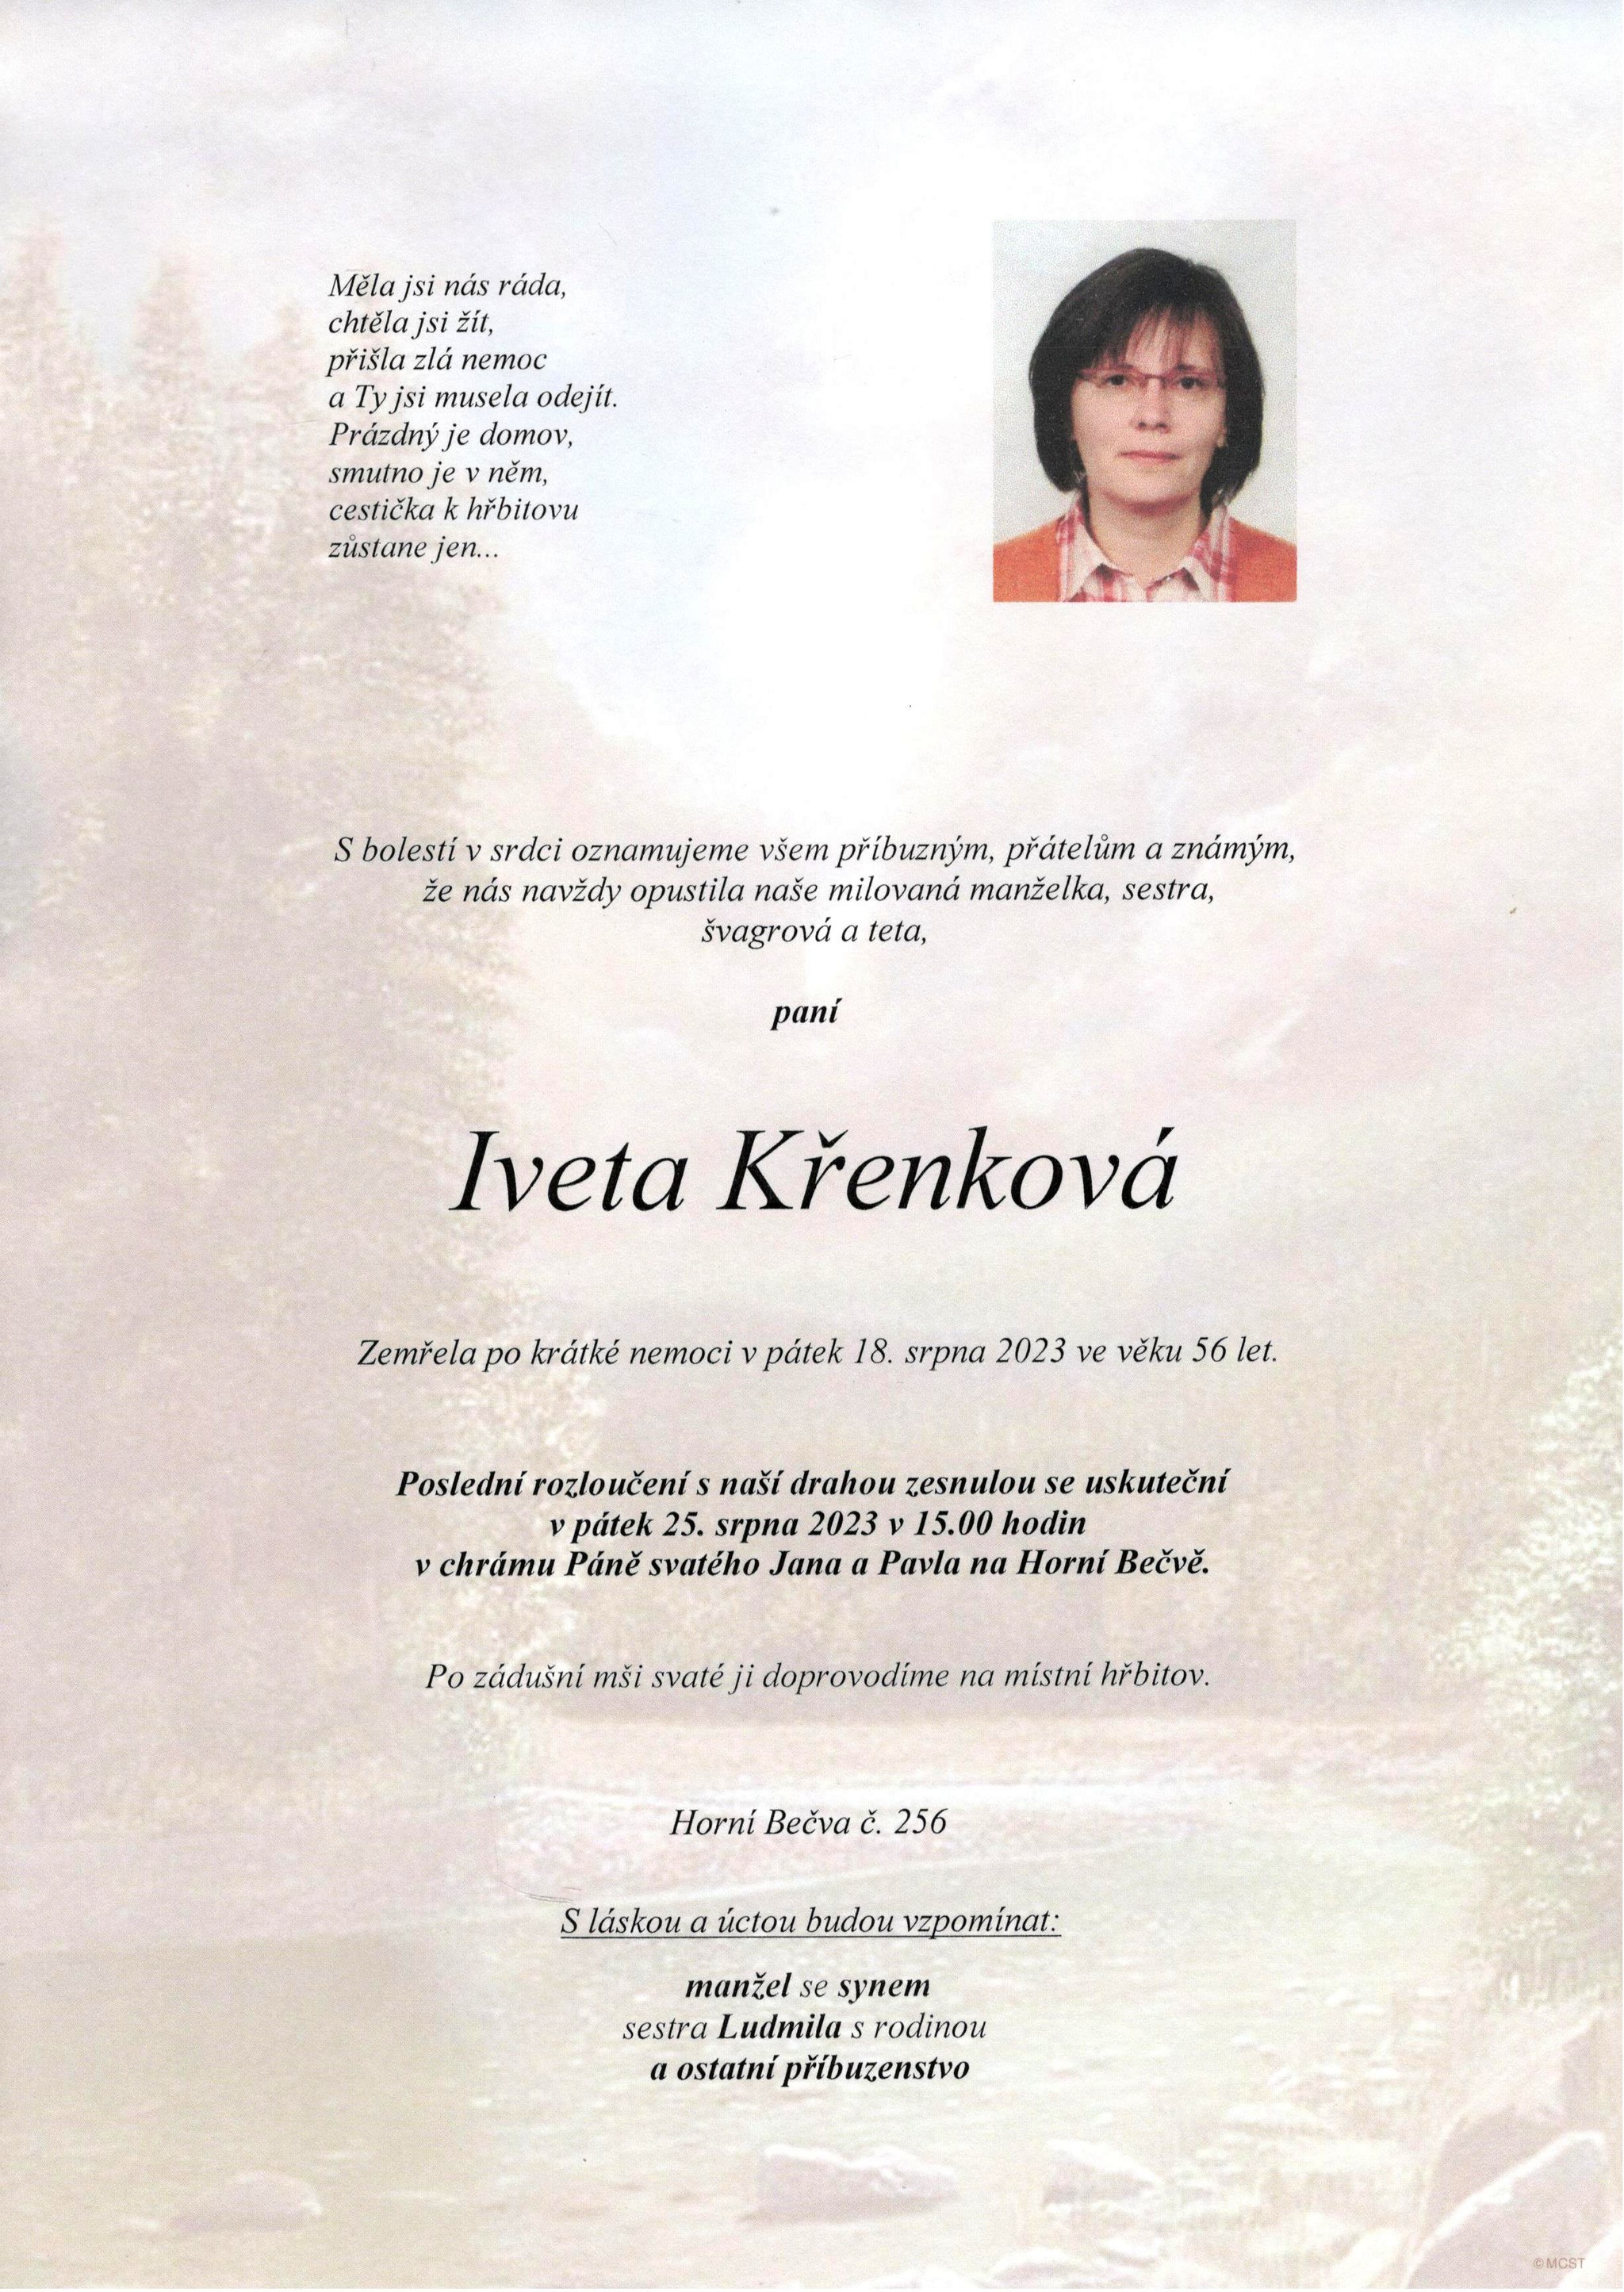 Iveta Křenková